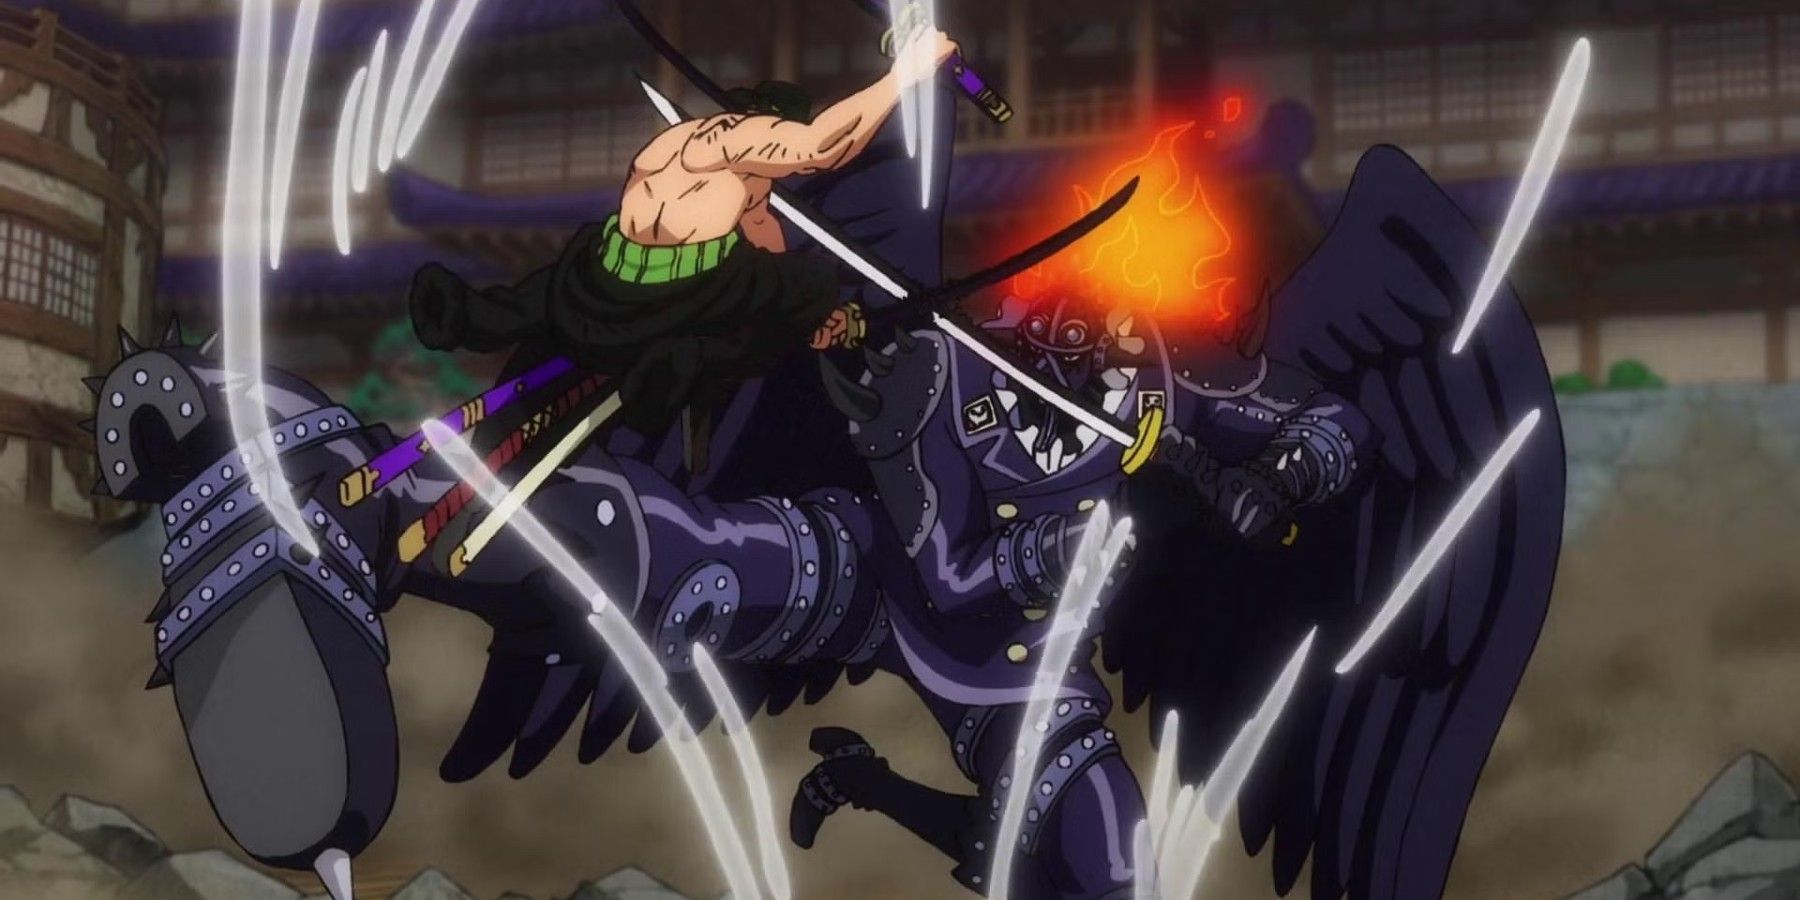 Zoro Vs King During the Onigashima Raid In One Piece